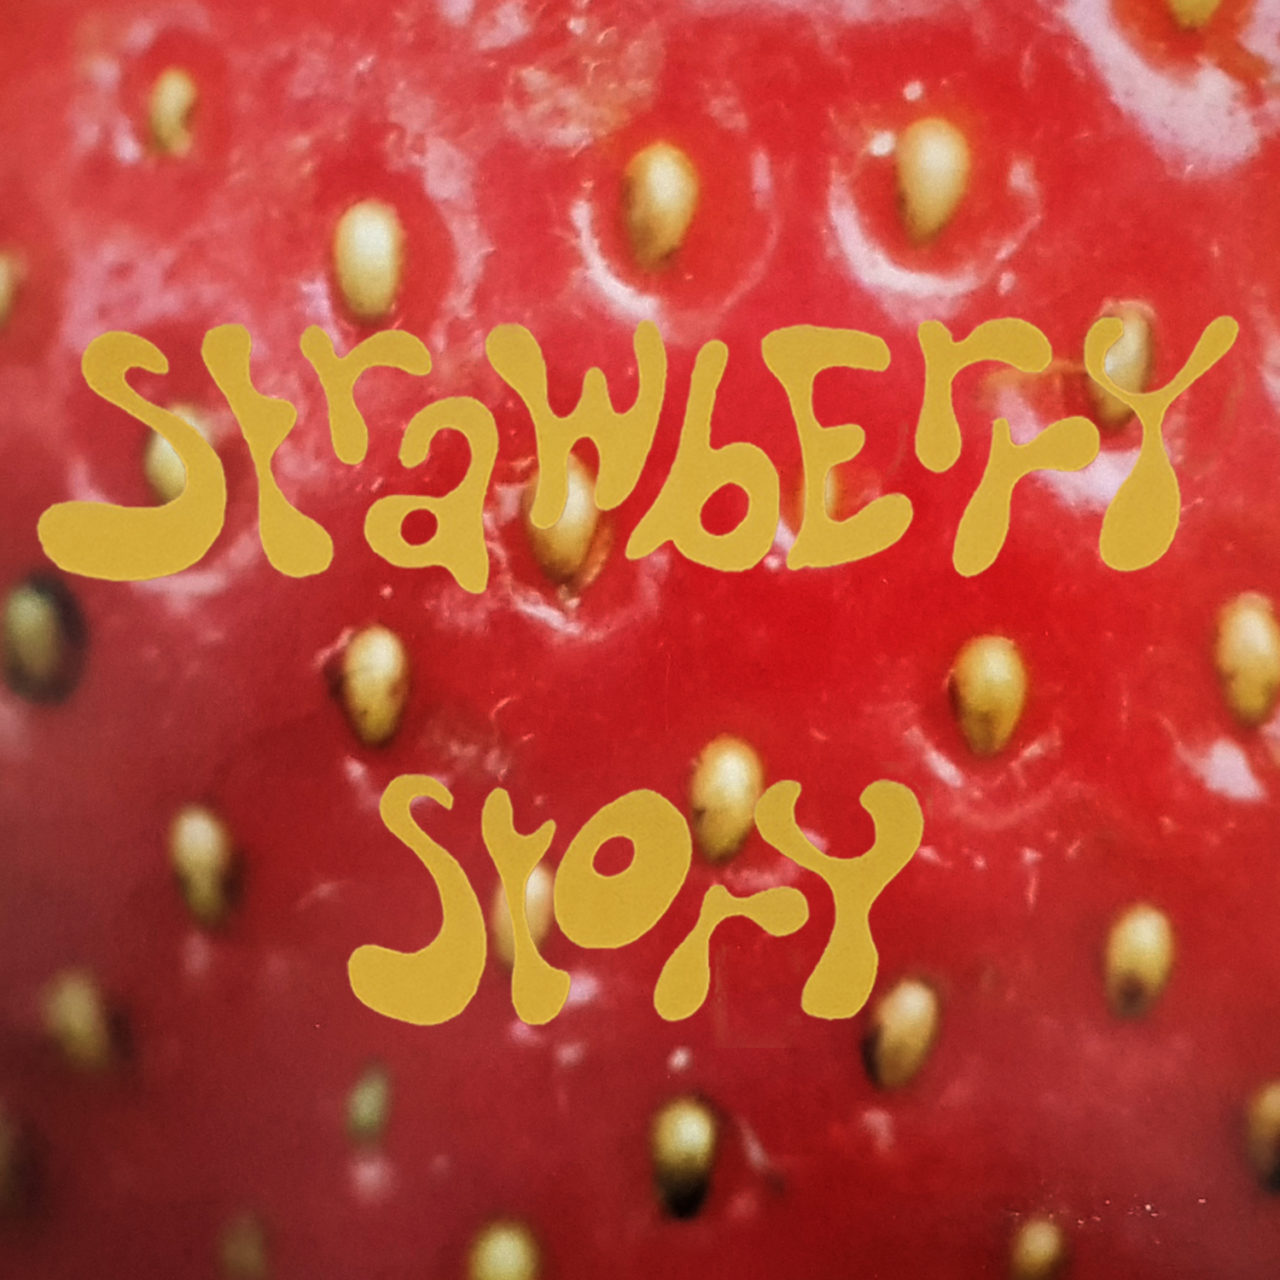 Strawberry Story music vide